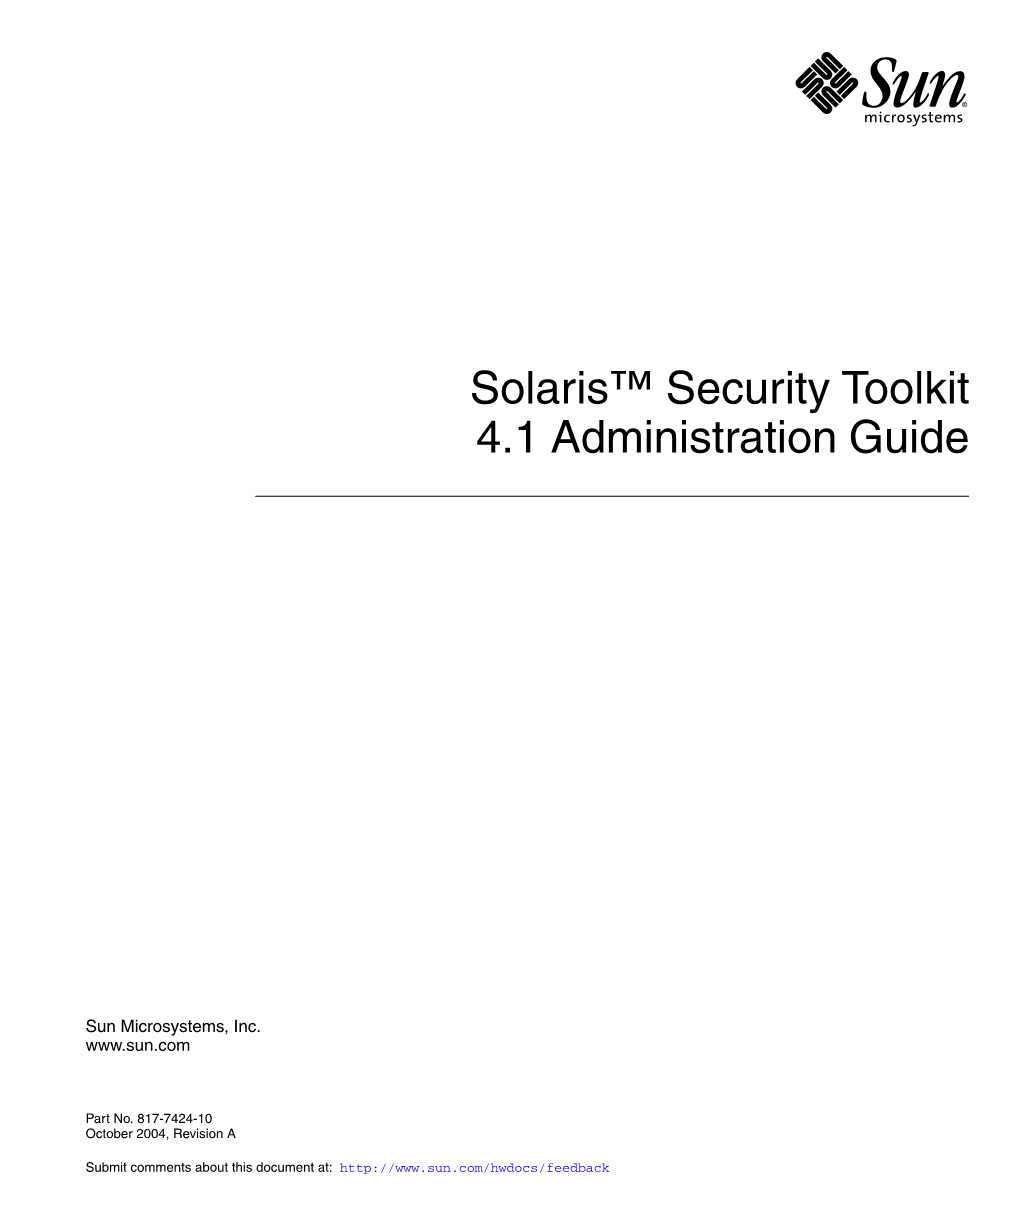 Solaris Security Toolkit 4.1 Administration